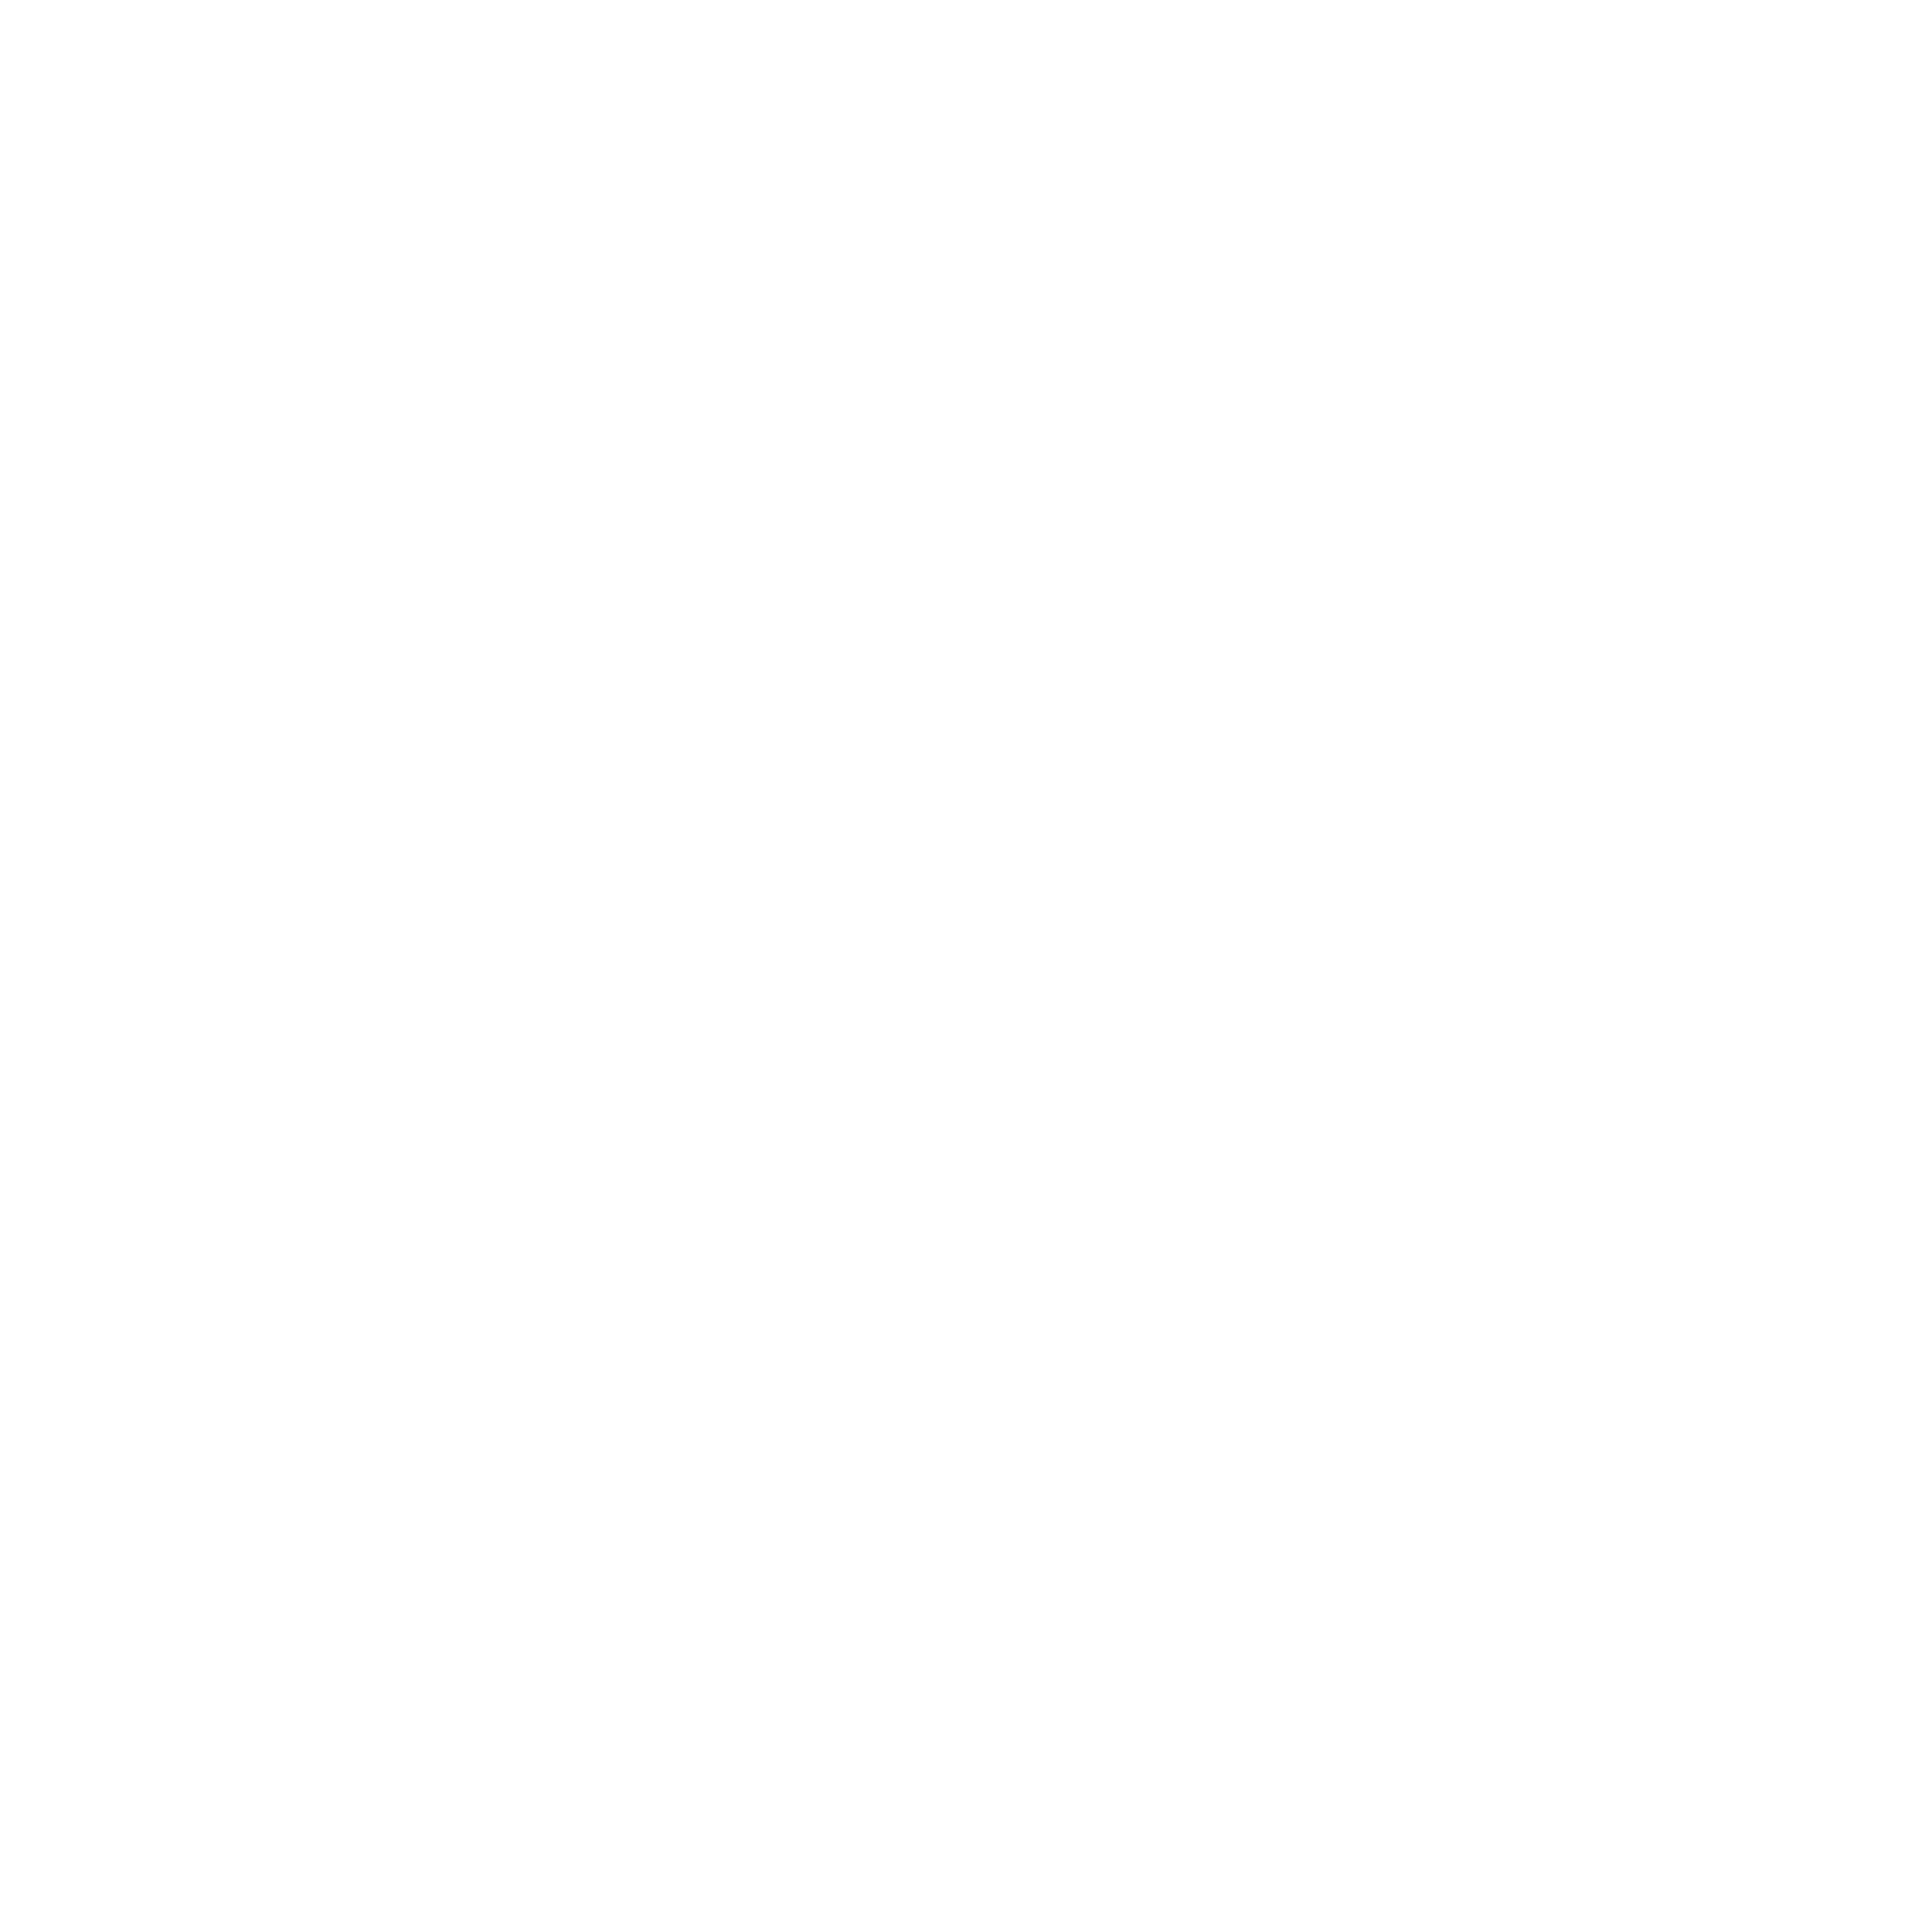 google white logo 0 - Google Logo